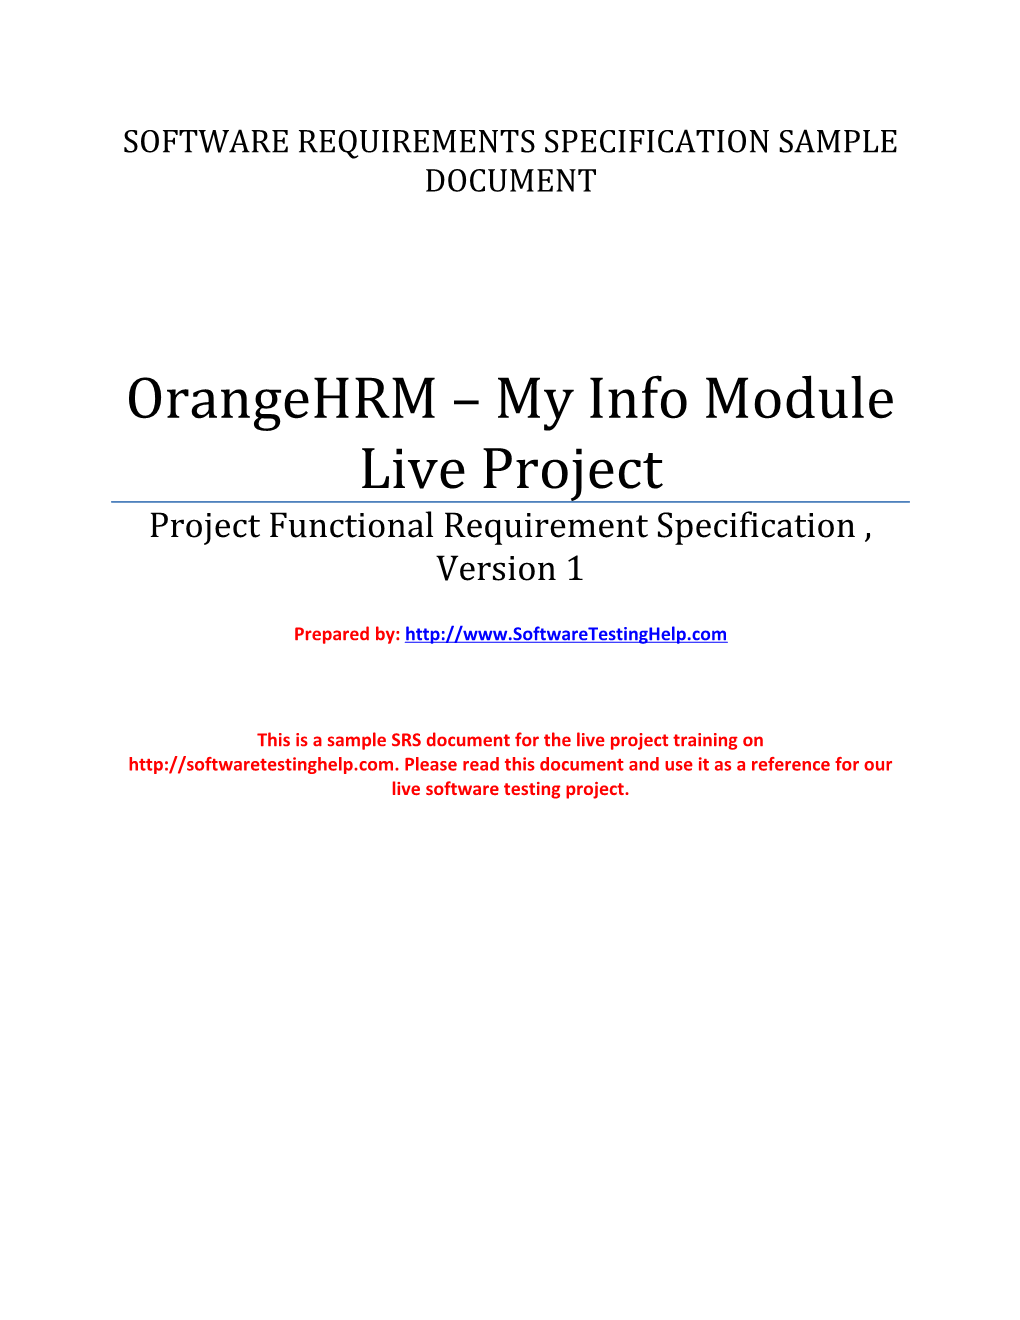 Orangehrm My Info Module Live Project